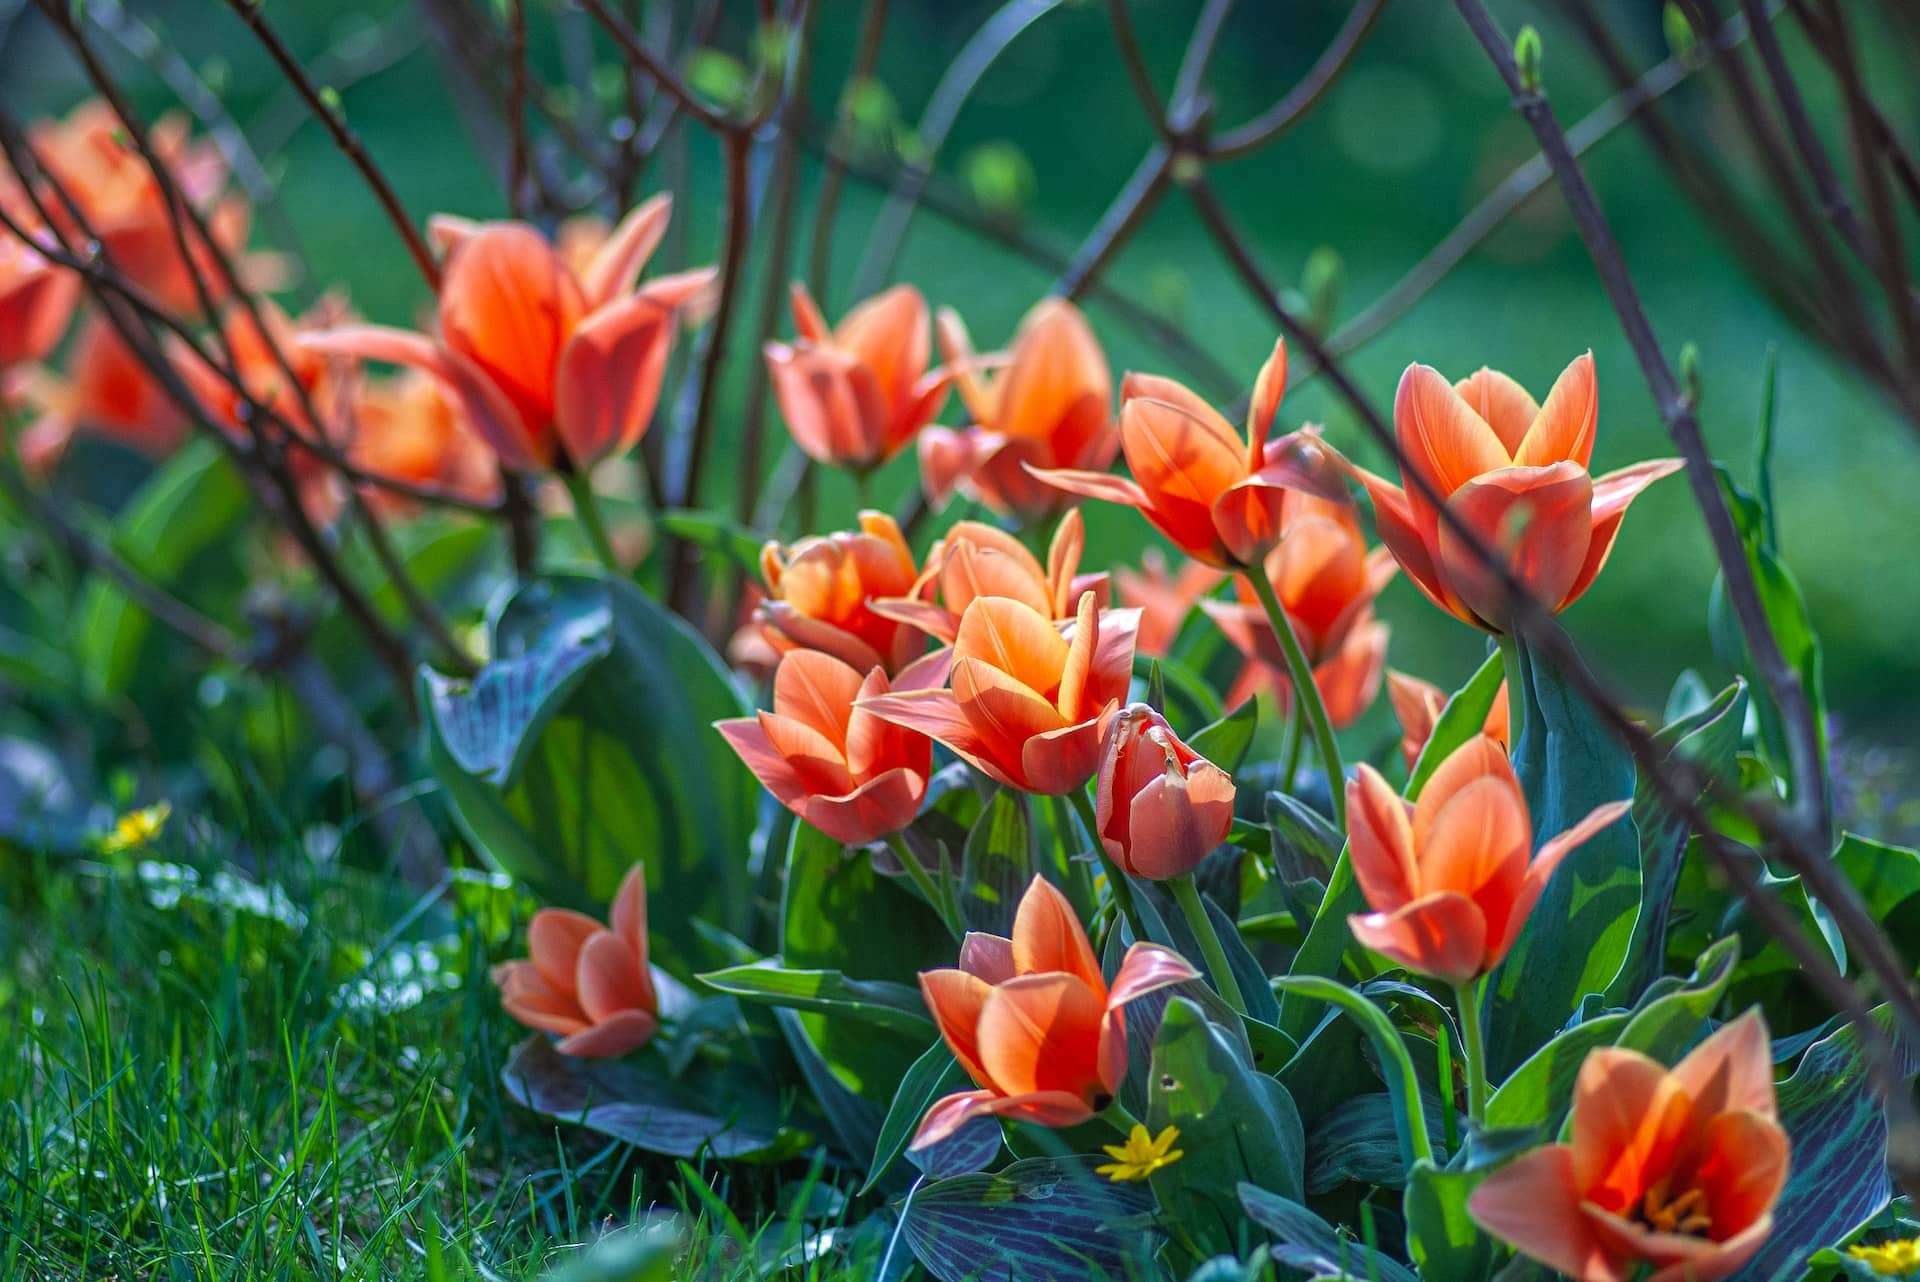 virághagyma lasagne tulipánok bokrok alatt